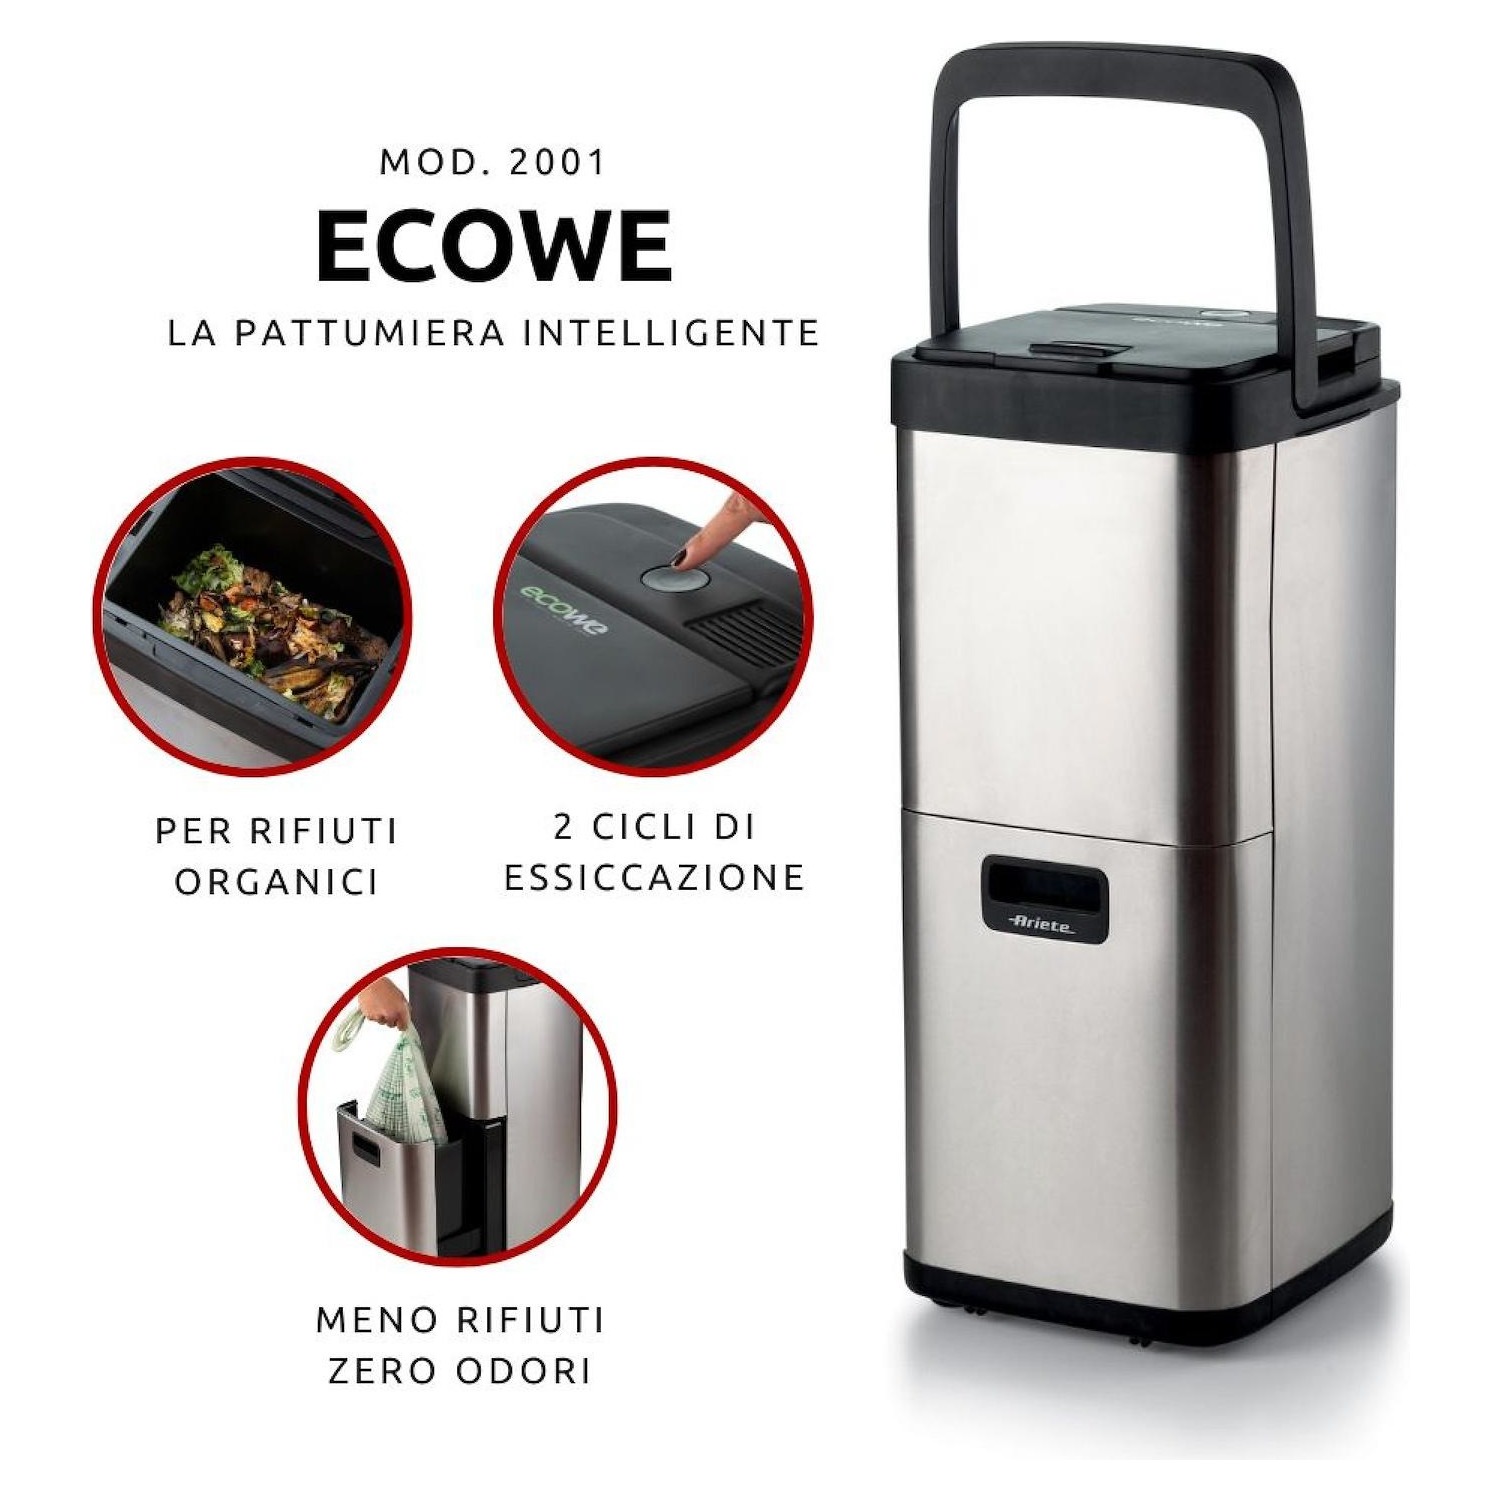 Pattumiera Smart Ariete Ecowe 2001 riduce i volumi dei rifiuti fino all'80%  - DIMOStore